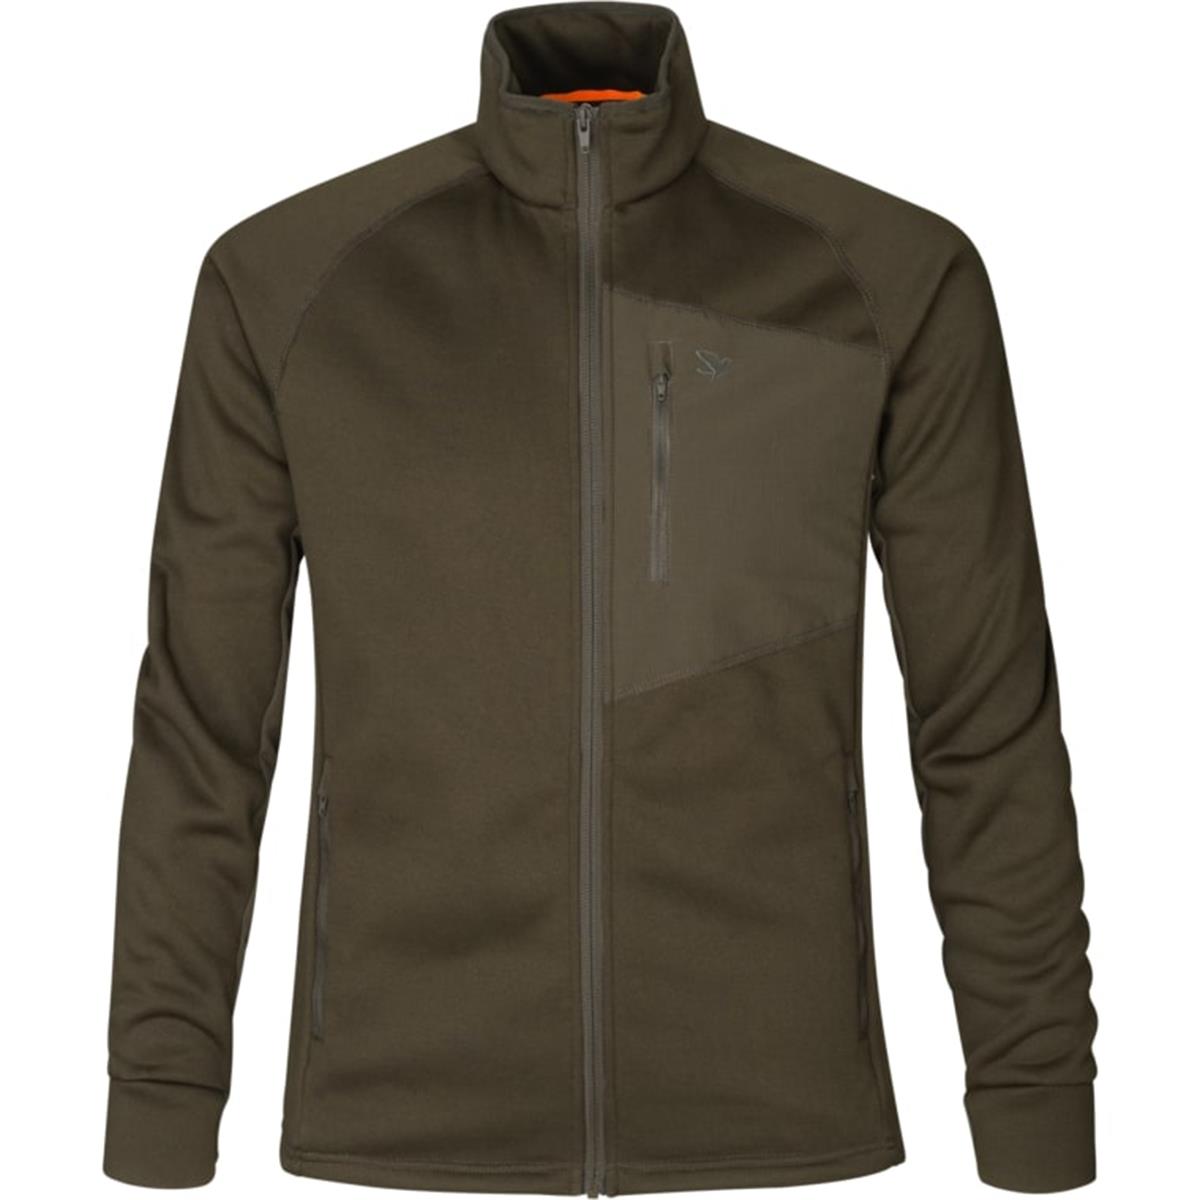 Куртка Key-Point fleece Pine green SEELAND сумка мужская на молнии 4 наружных кармана длинная стропа